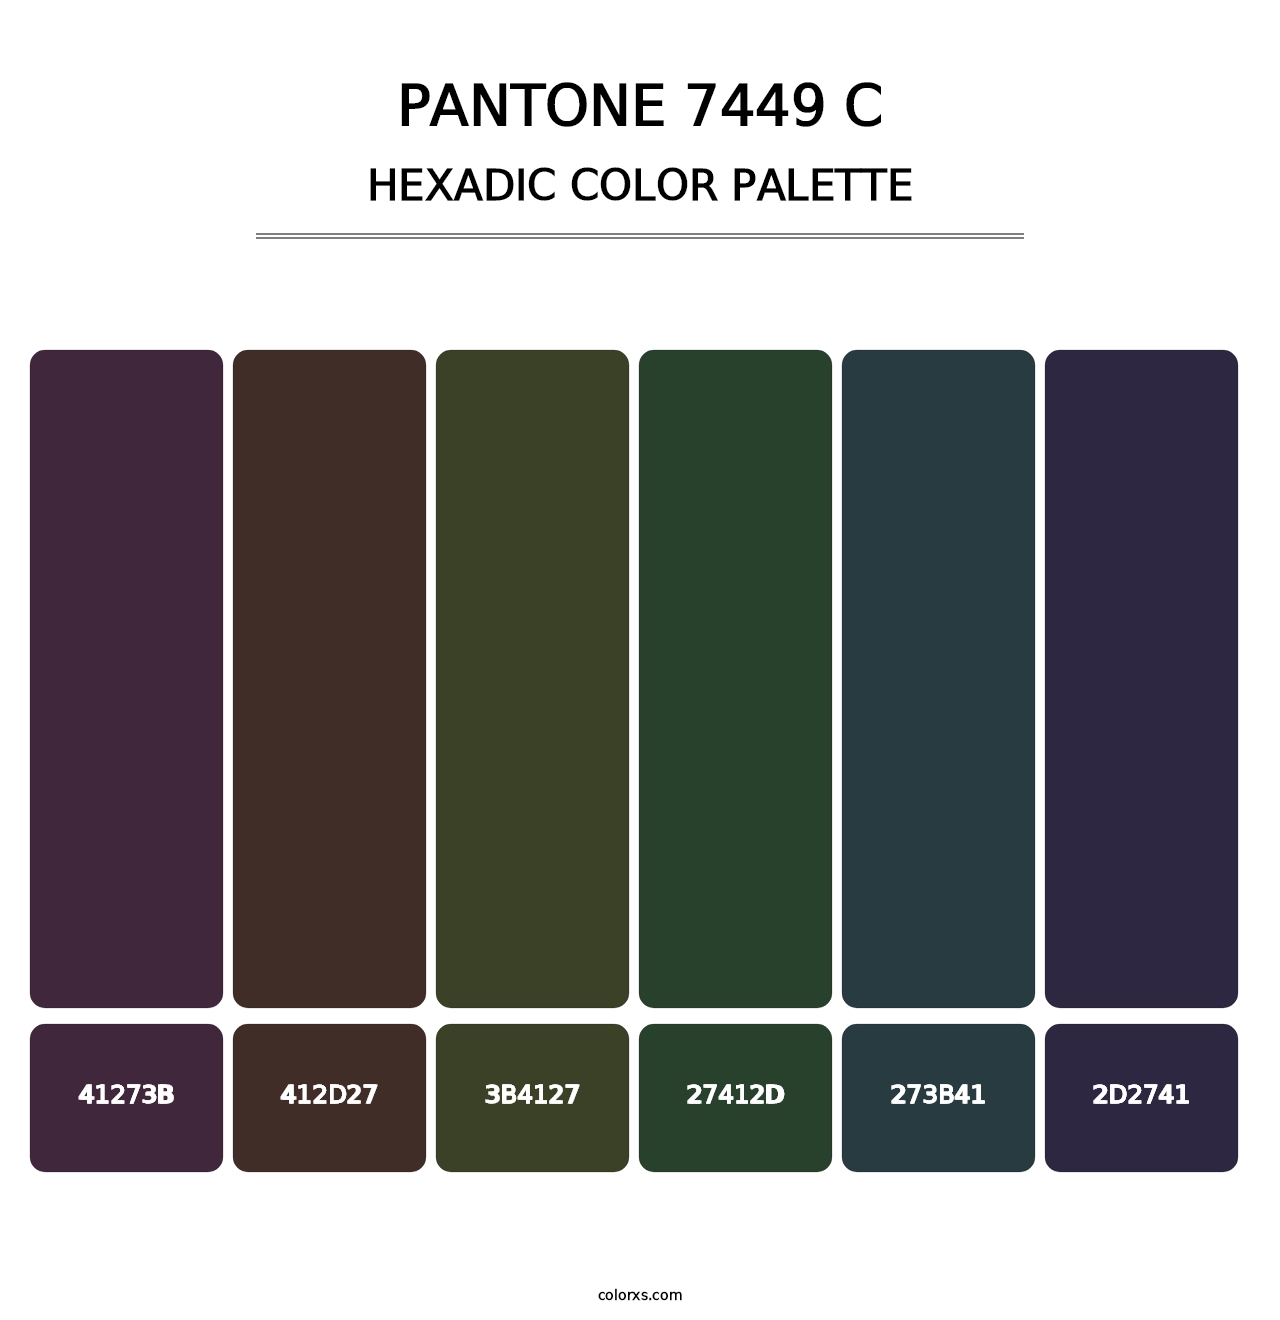 PANTONE 7449 C - Hexadic Color Palette